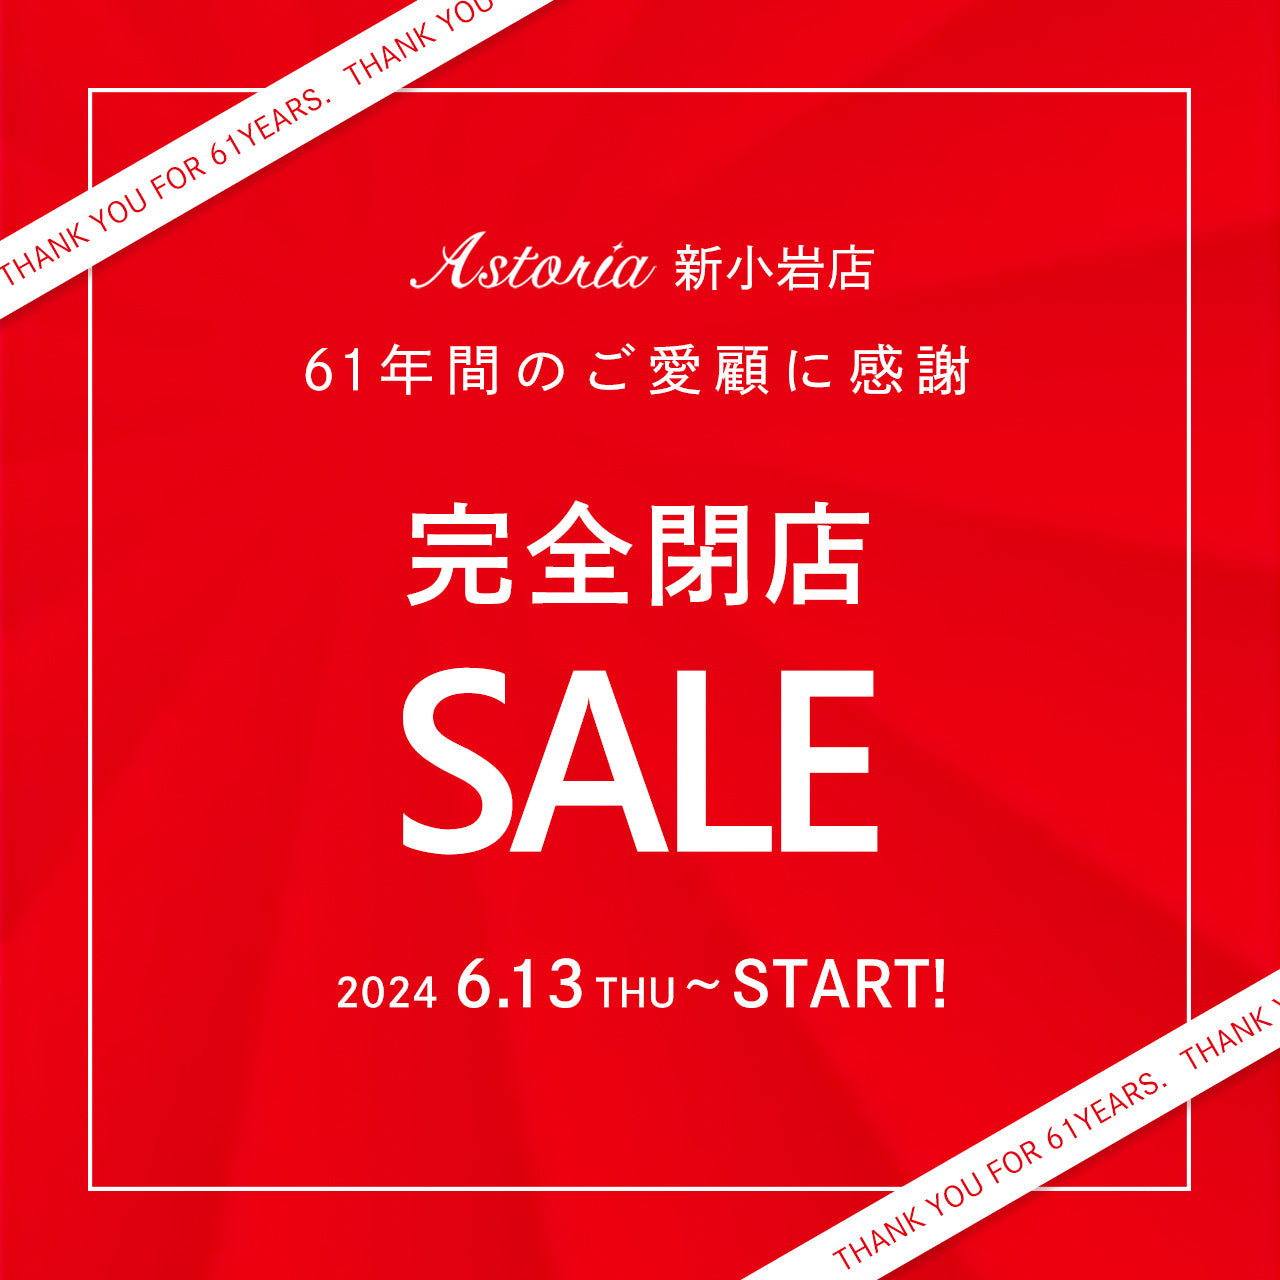 ■Astoria新小岩店閉店セール■ 6月13日(木)～START!